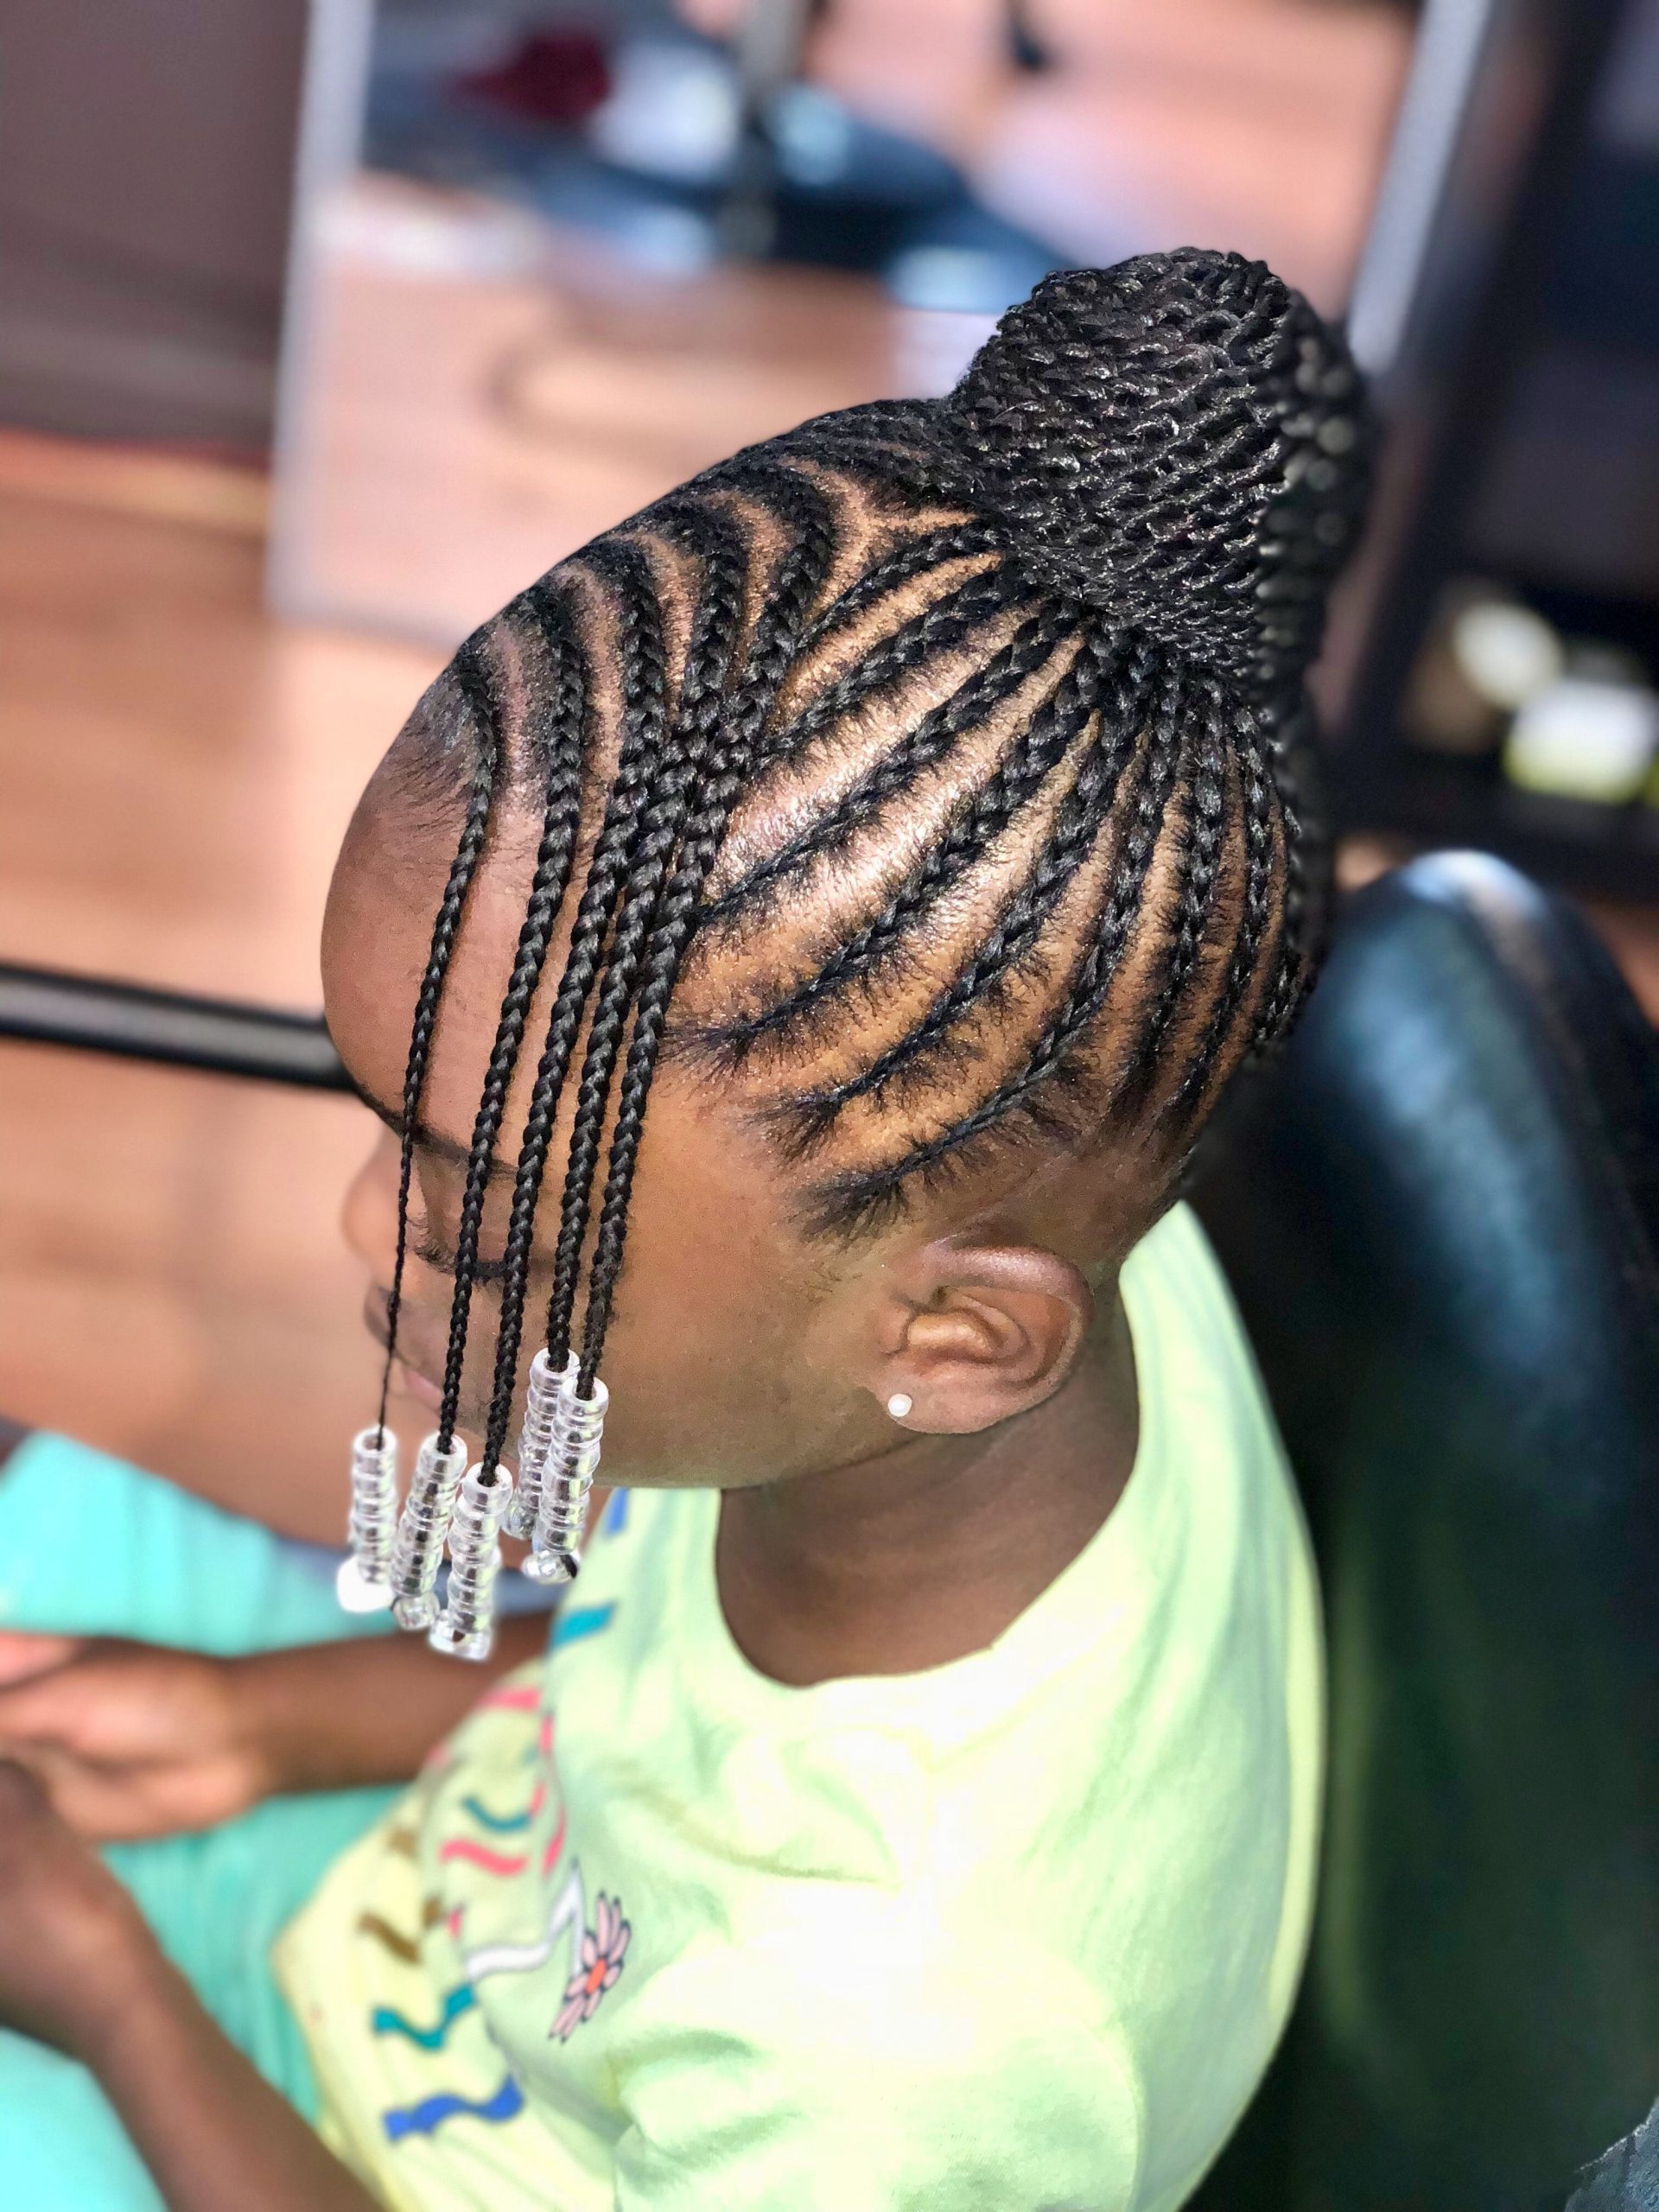 little girl braid hairstyles